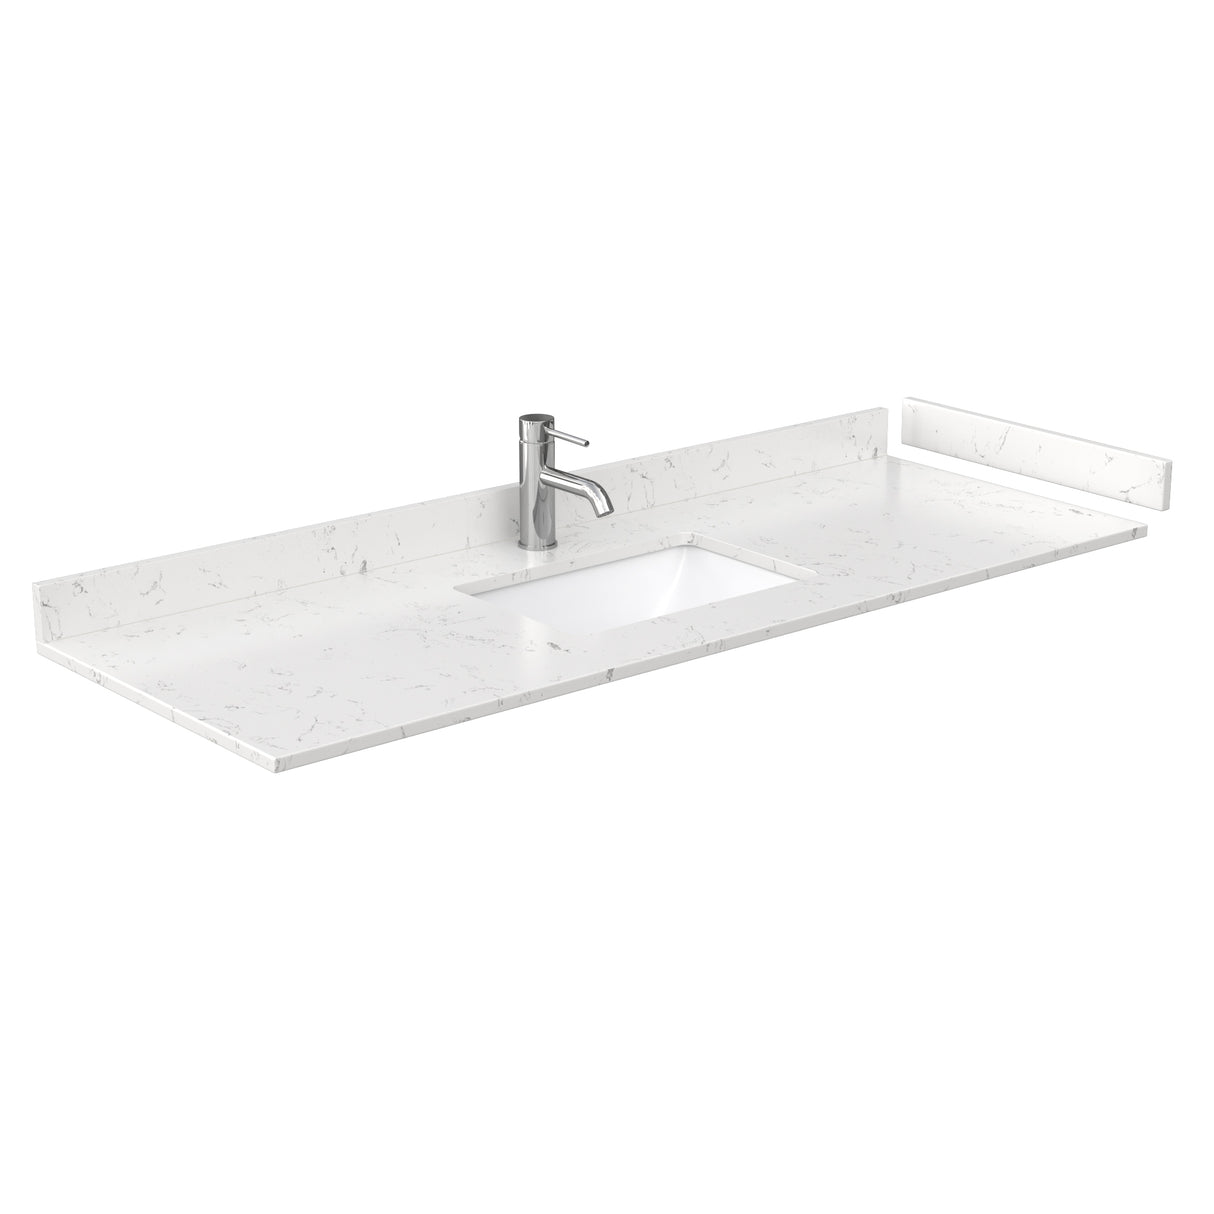 Amici 60 Inch Single Bathroom Vanity in White Carrara Cultured Marble Countertop Undermount Square Sink Matte Black Trim